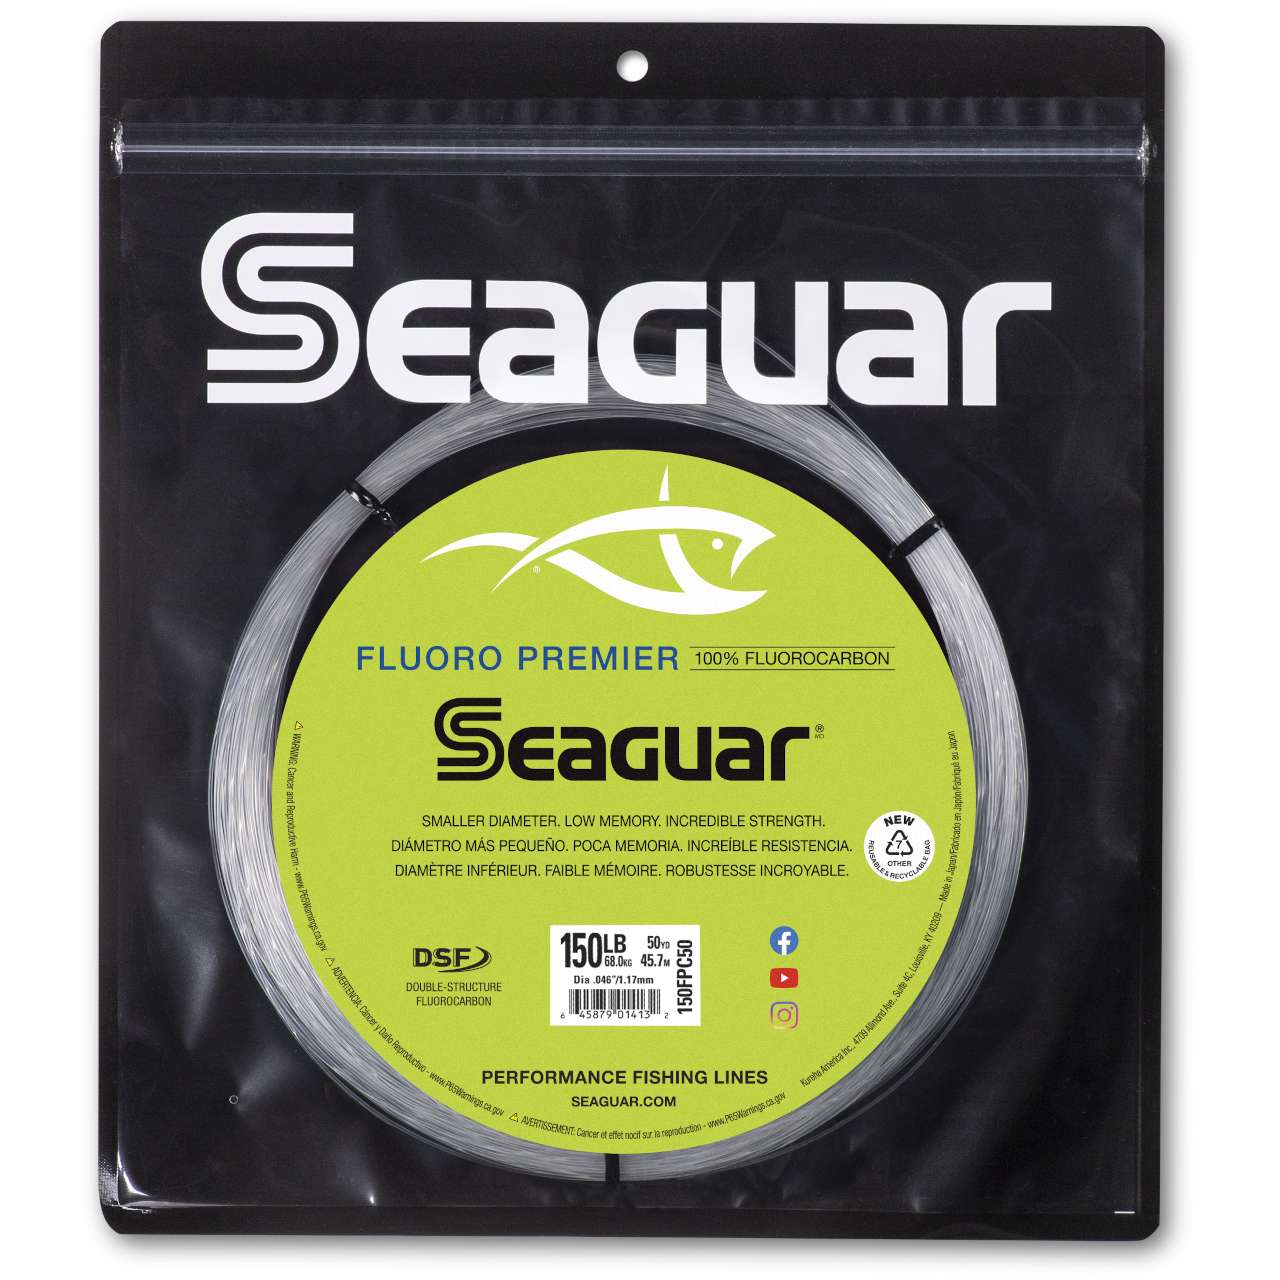 Seaguar Fluoro Premier Fluorocarbon Leader Line 50 Yard Spools *CHOOSE LB TEST* 